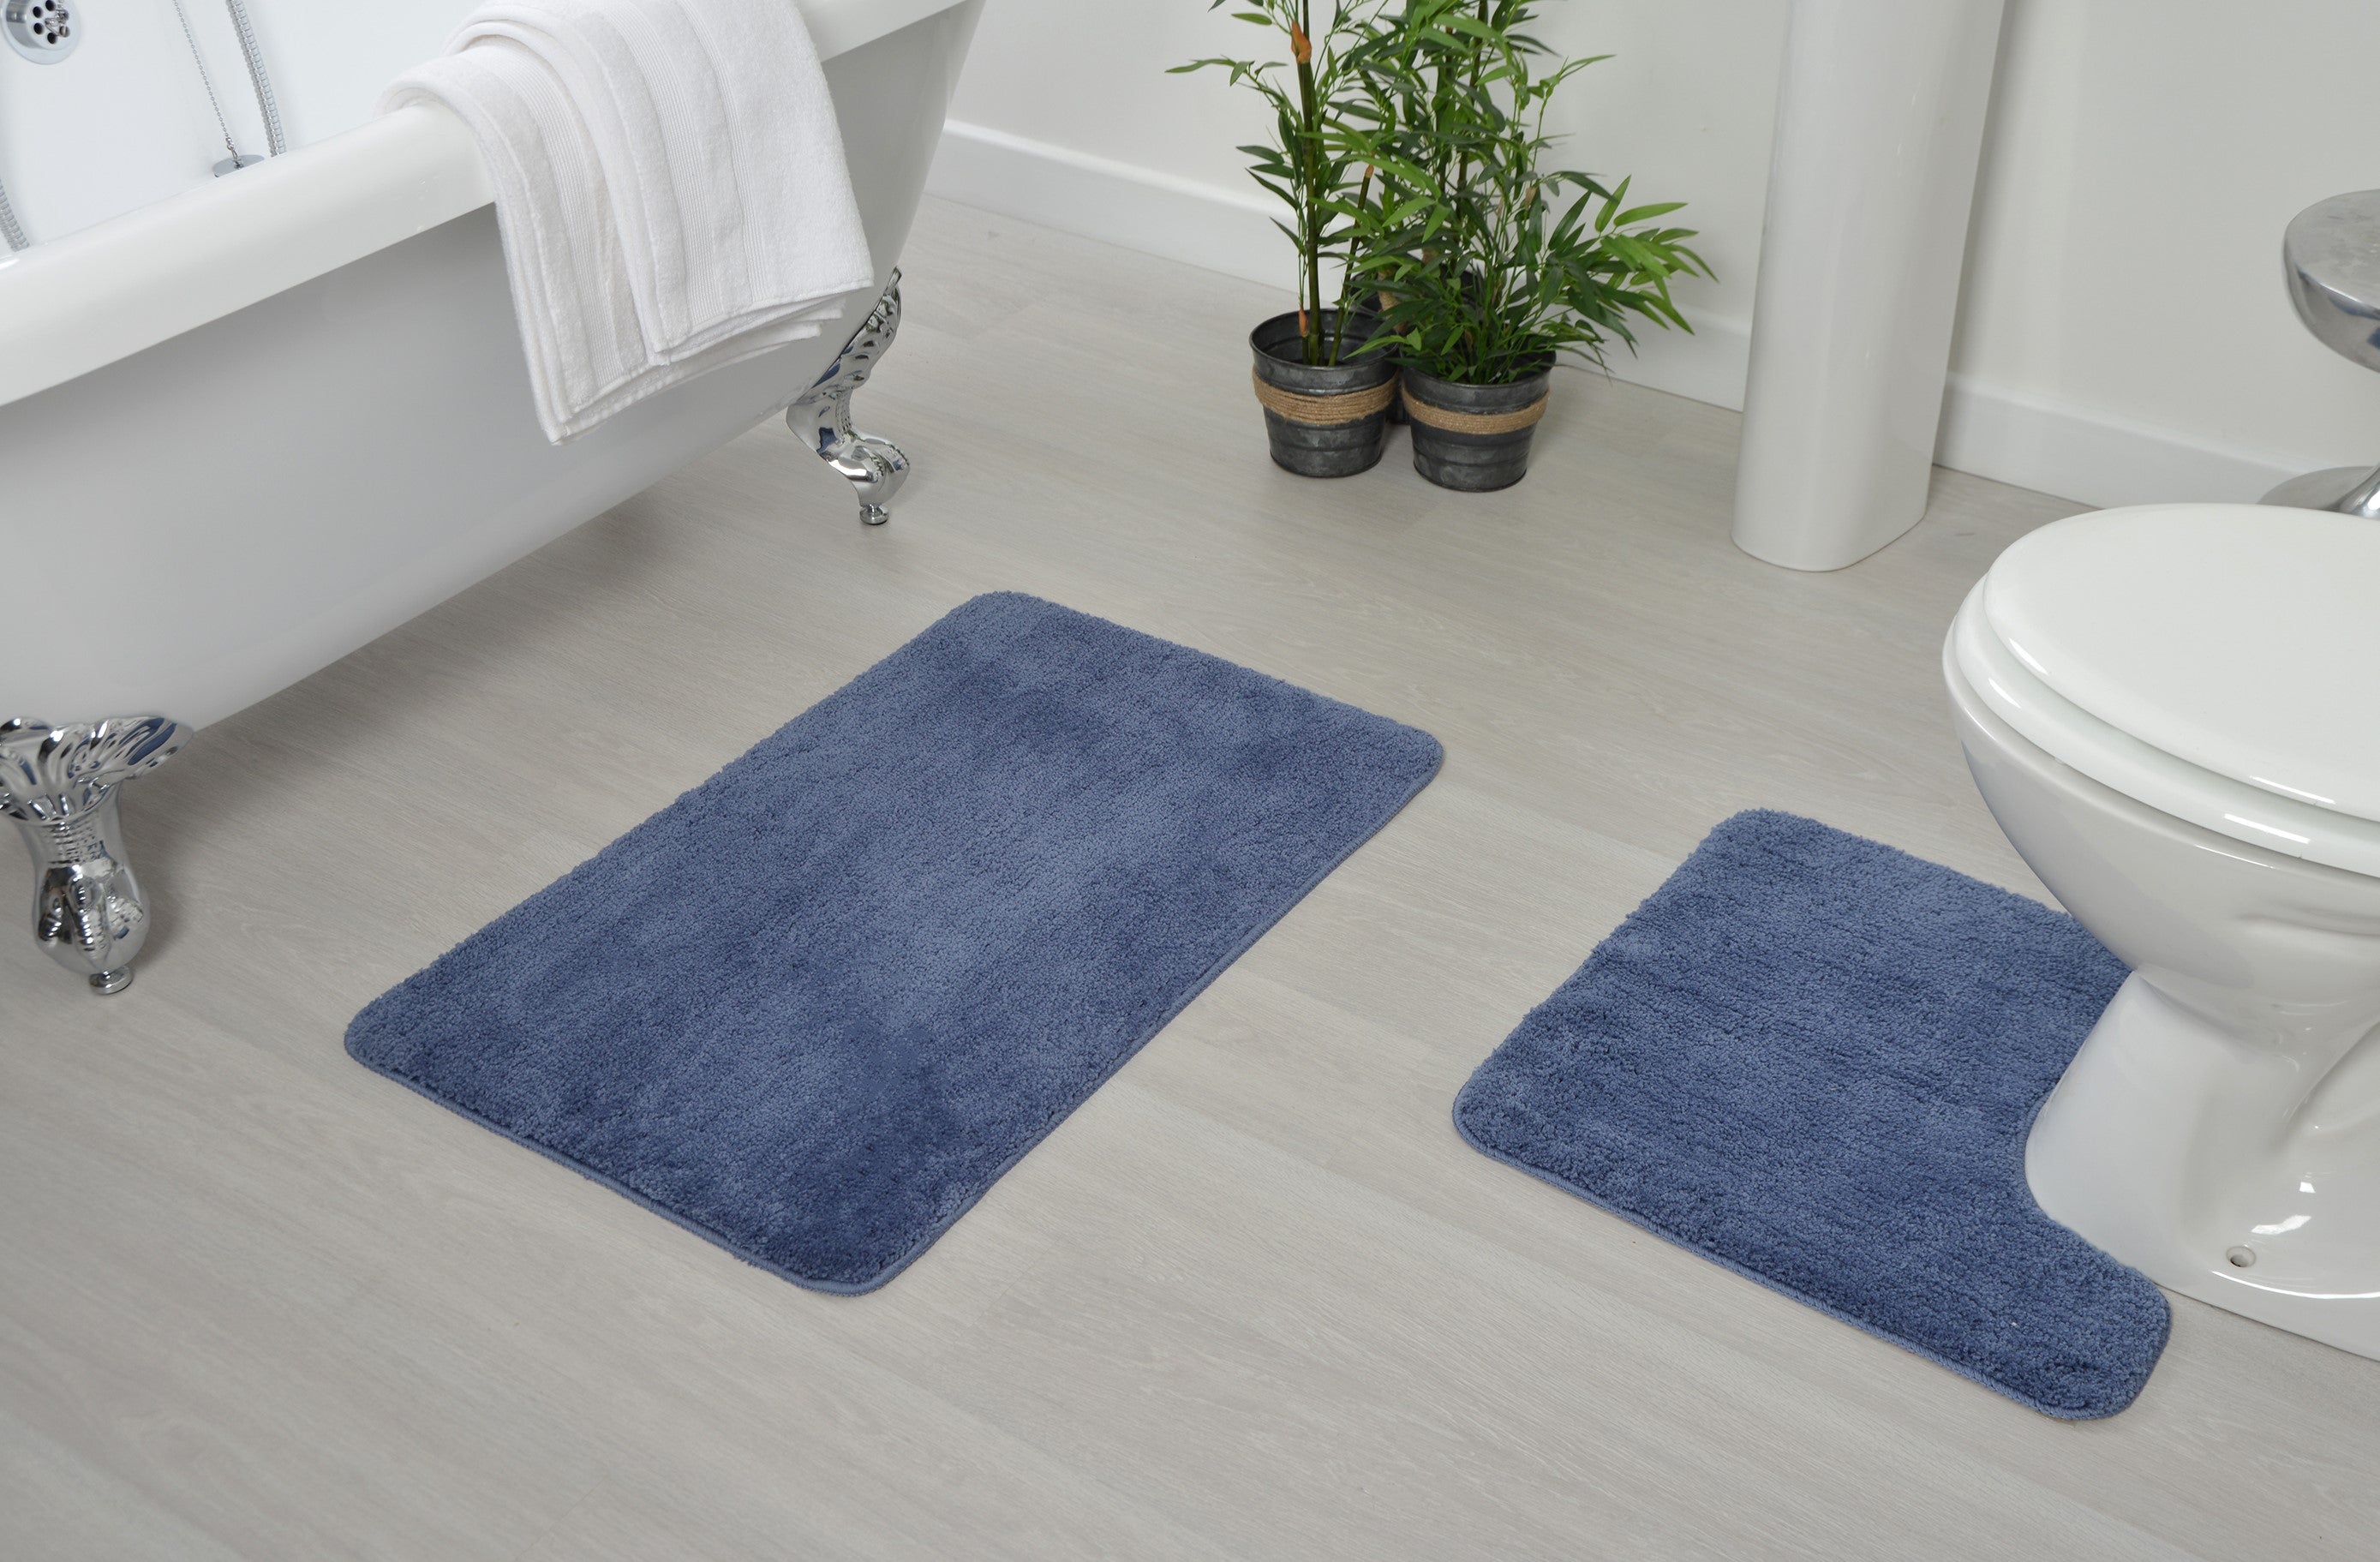 easy to clean bath mats in light bathroom